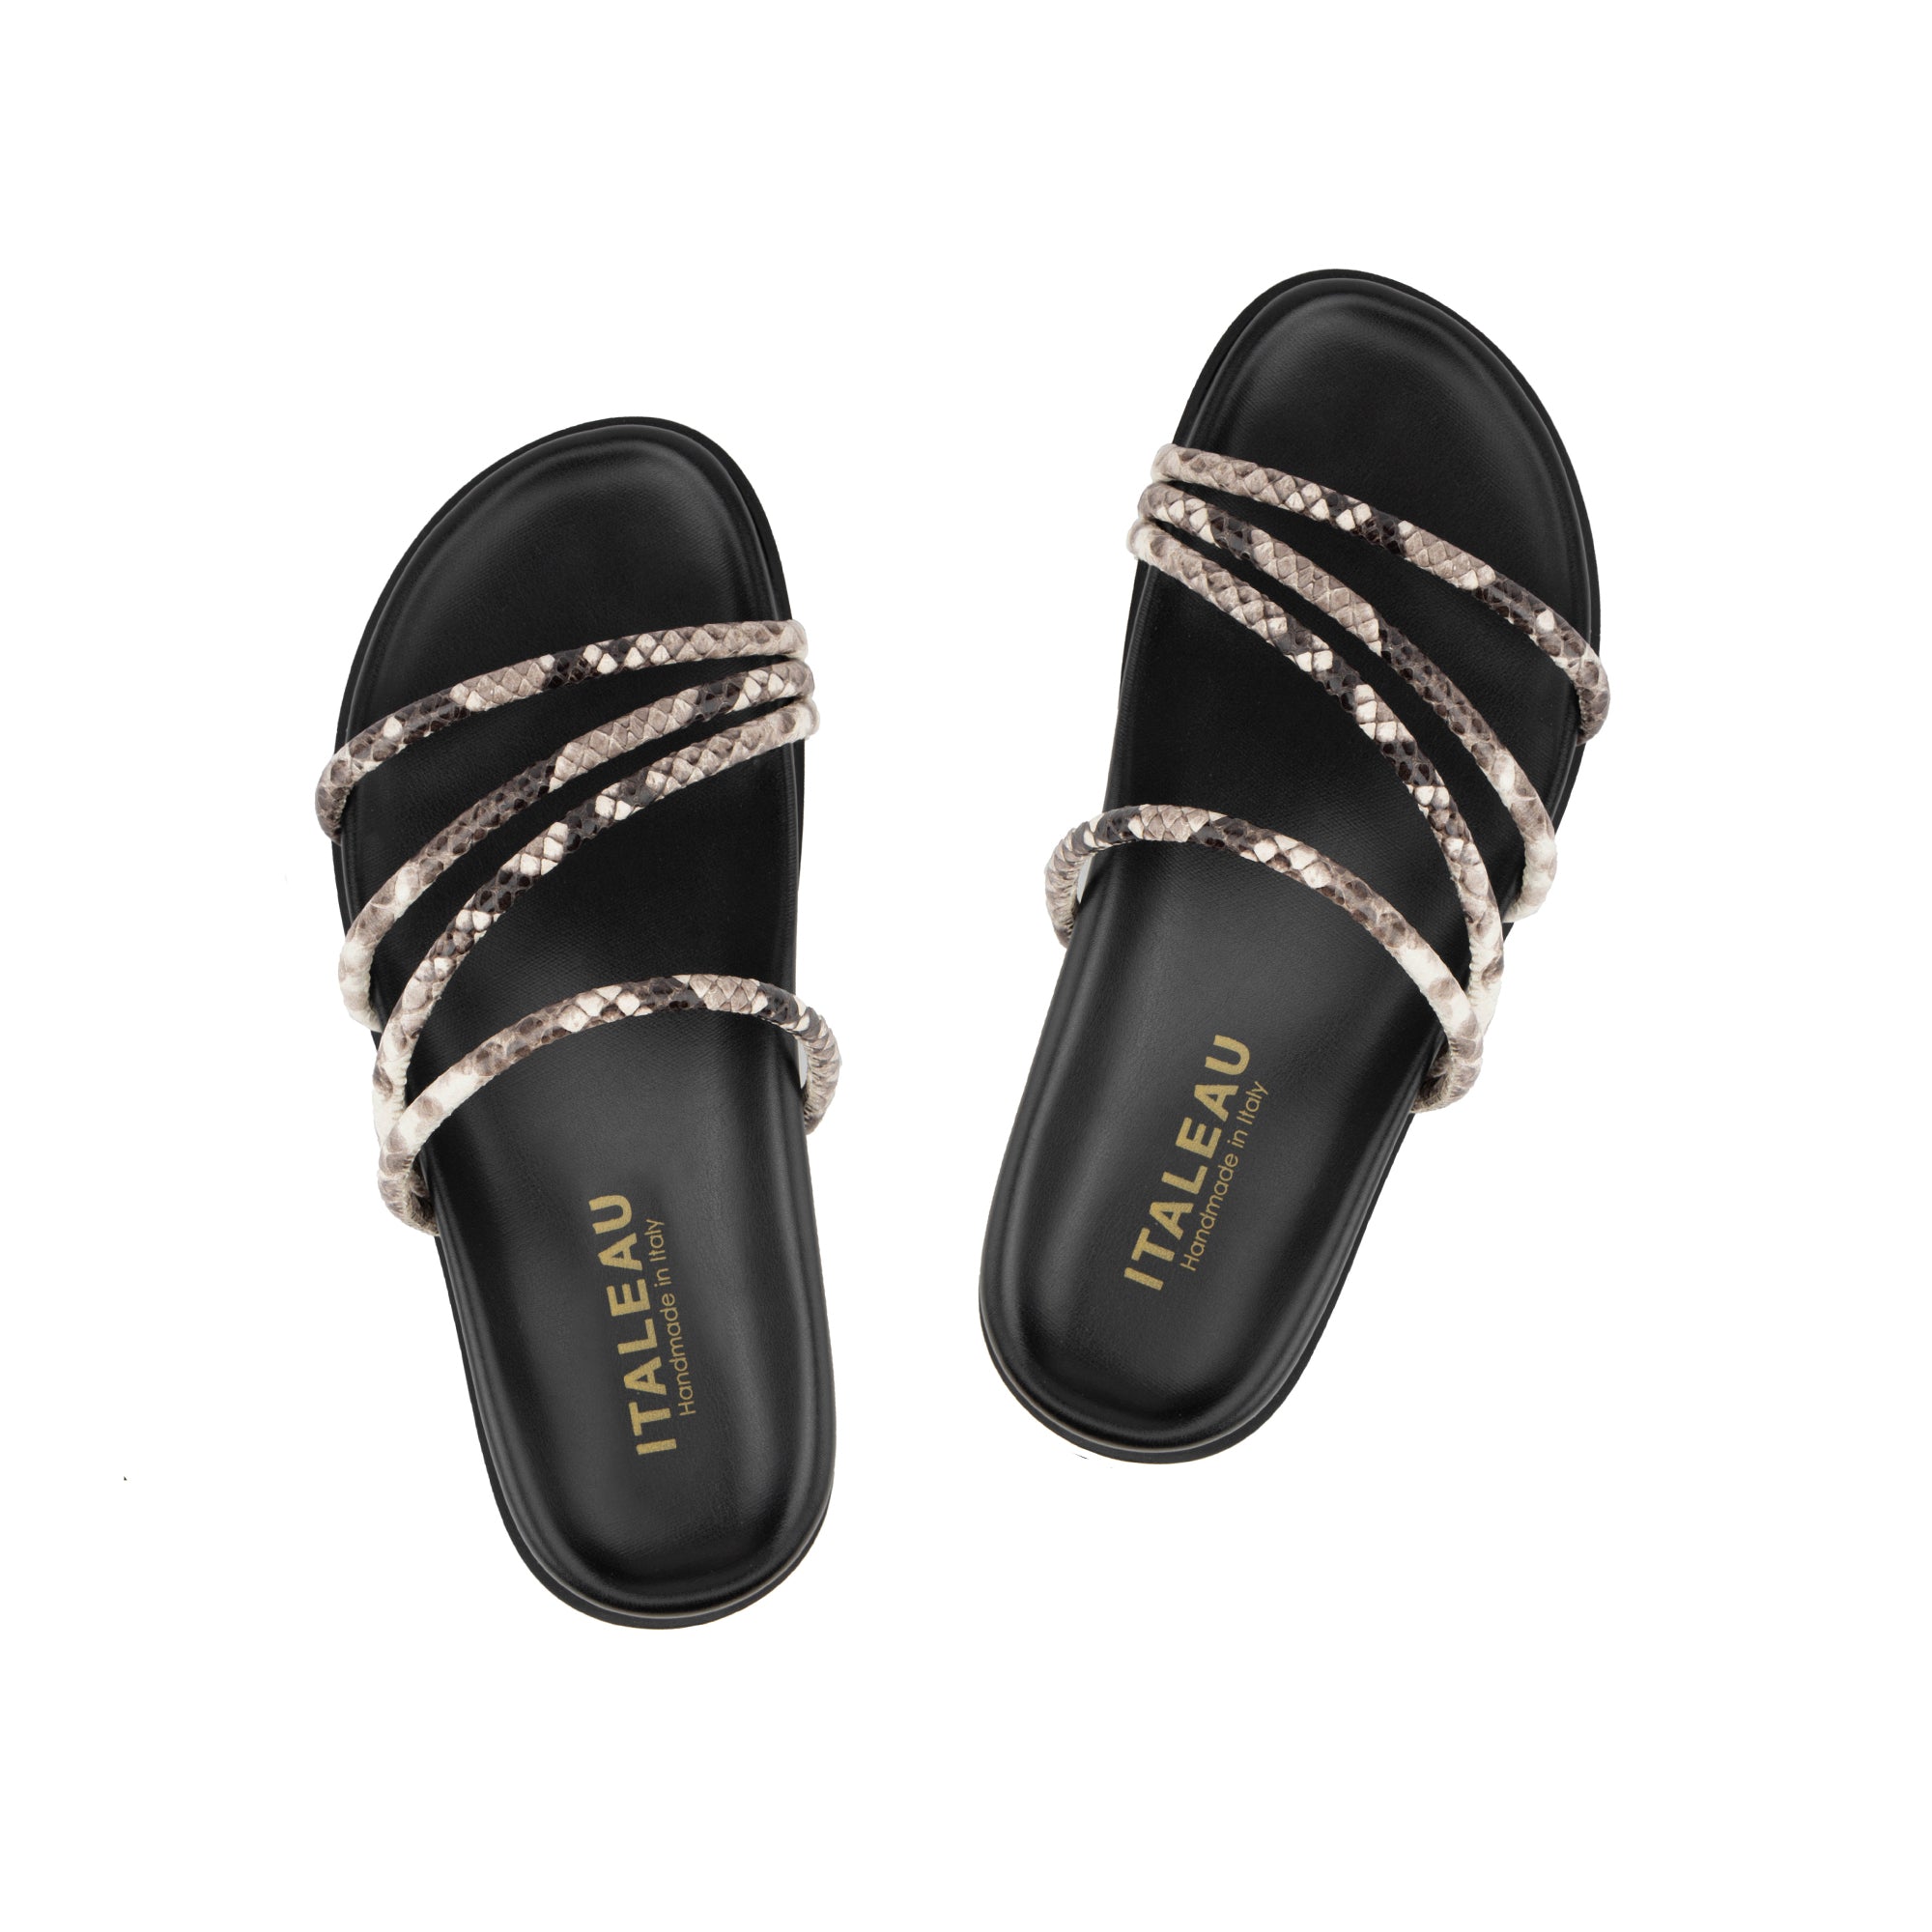 Italeau – Sandals – Milena Slides – Embossed Snake – Made in Italy